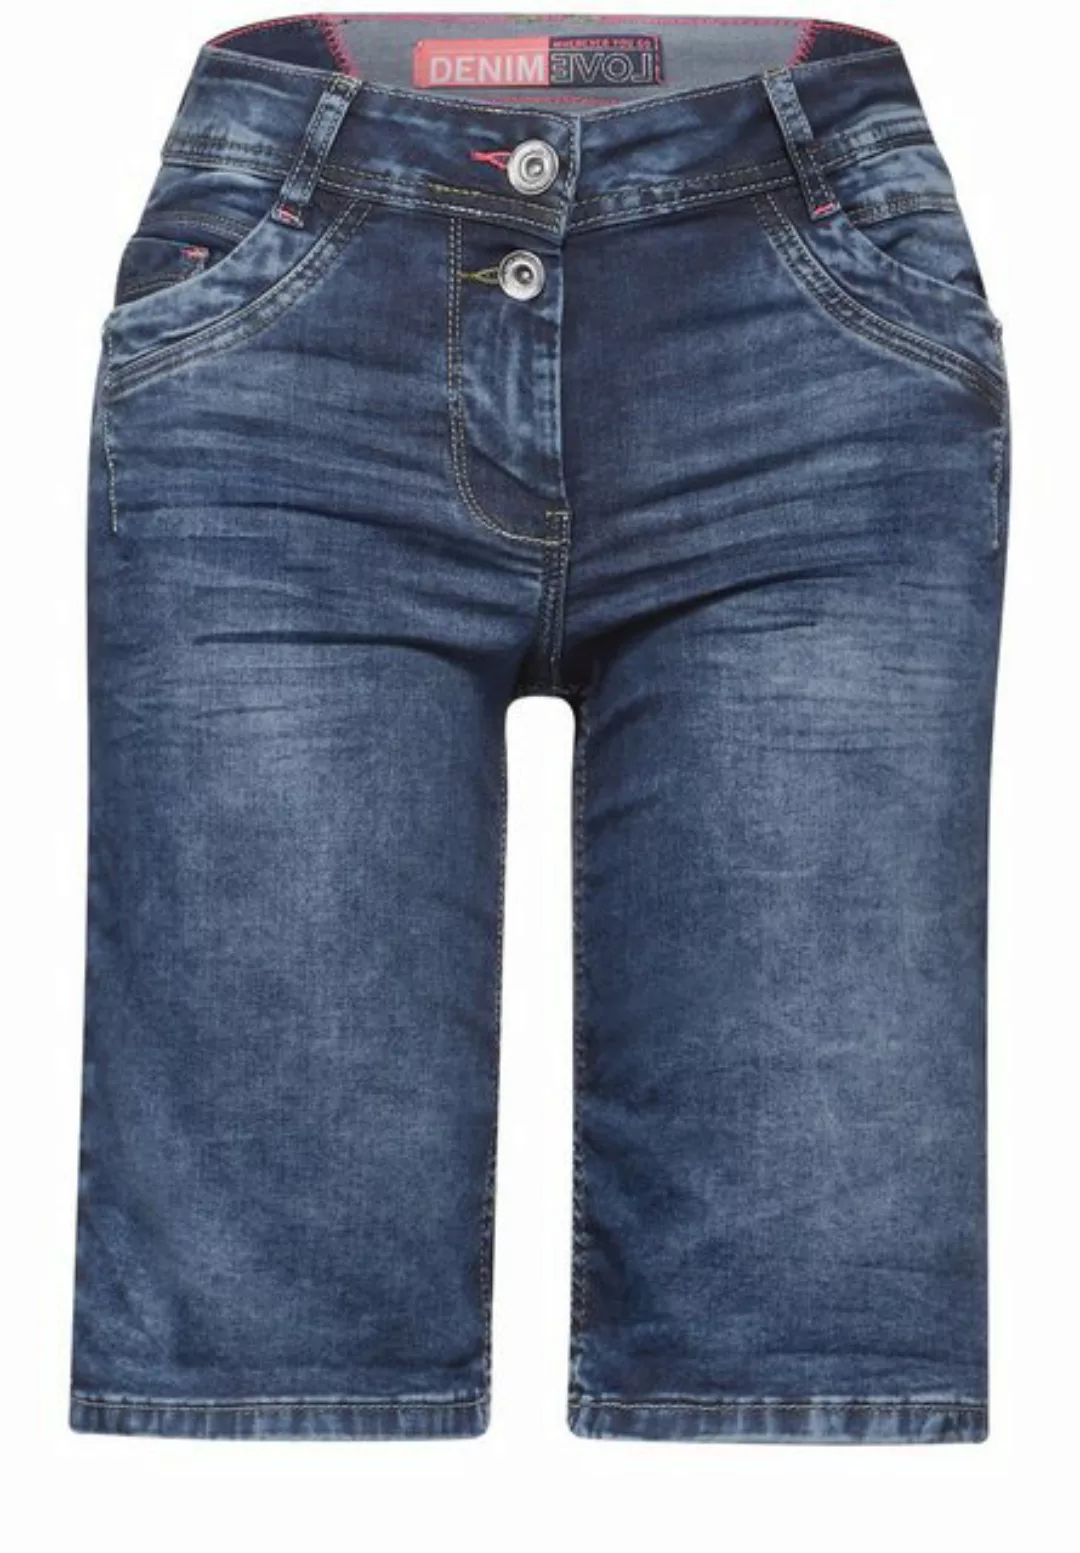 Cecil Jeansshorts - kurze Jeans Hose - Bermuda Shorts - Casual Fit - Jeans günstig online kaufen